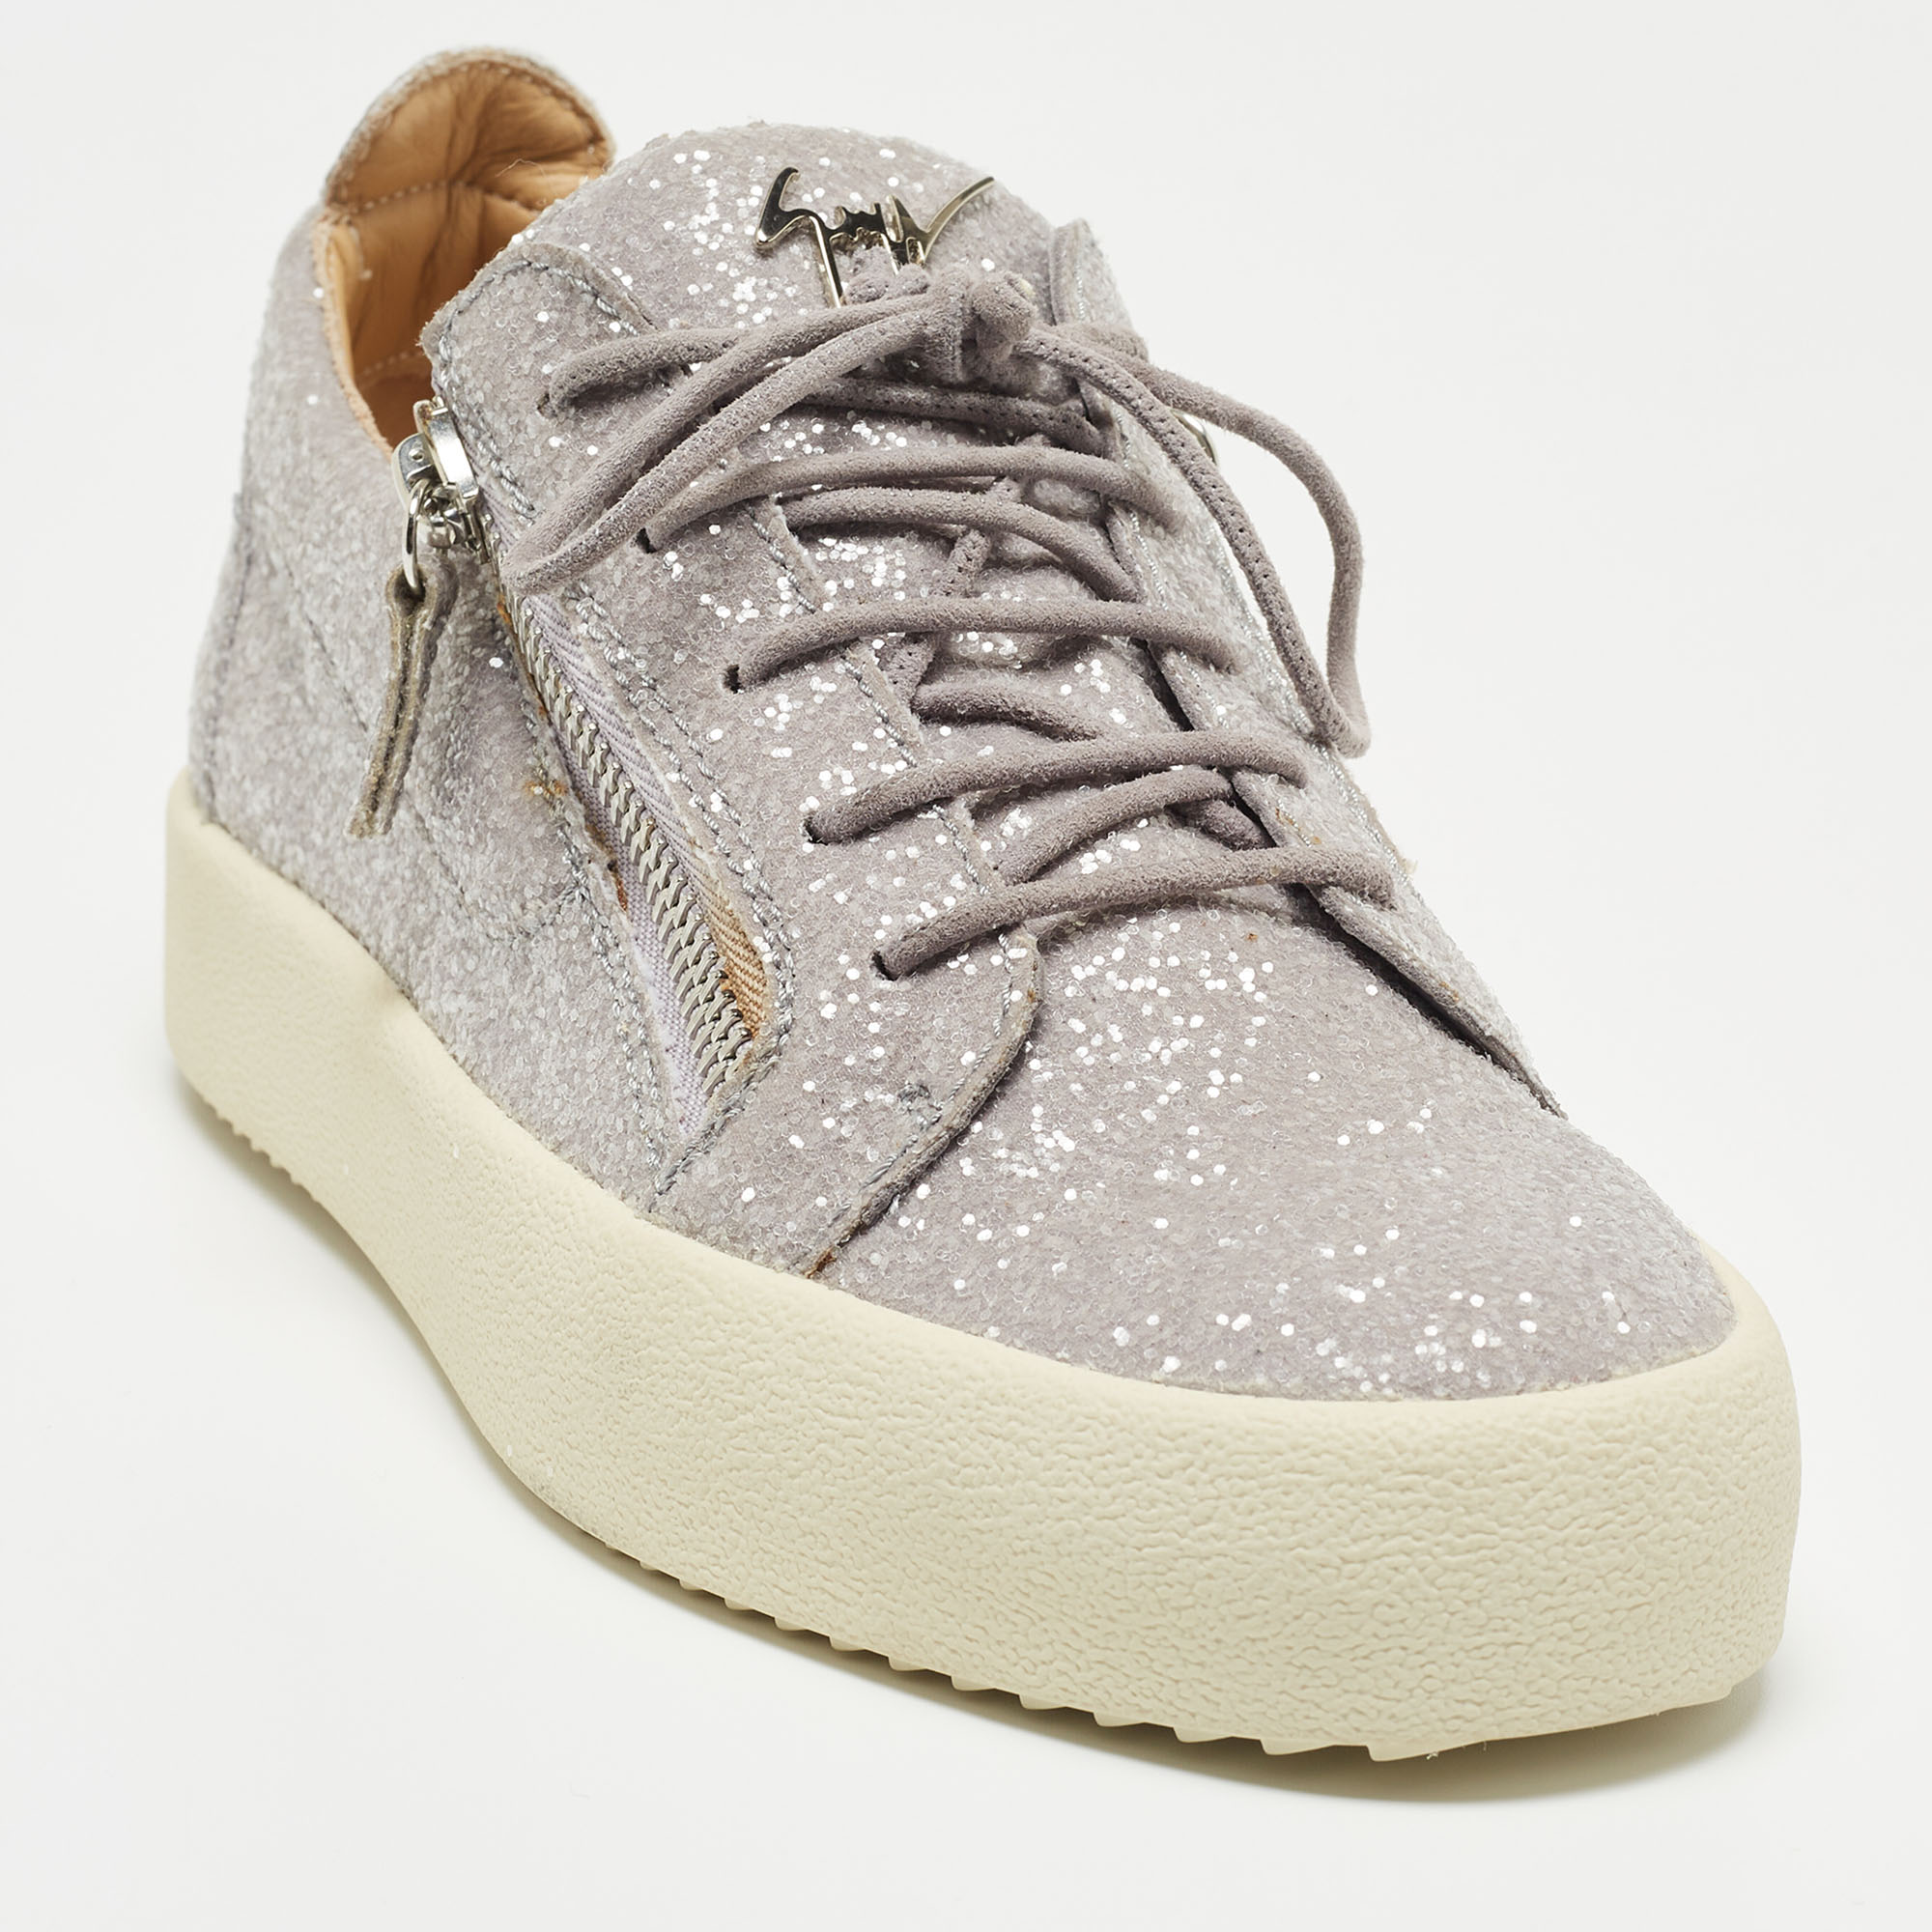 Giuseppe Zanotti Metallic Grey Suede Double Zip Low Top Sneakers Size 41